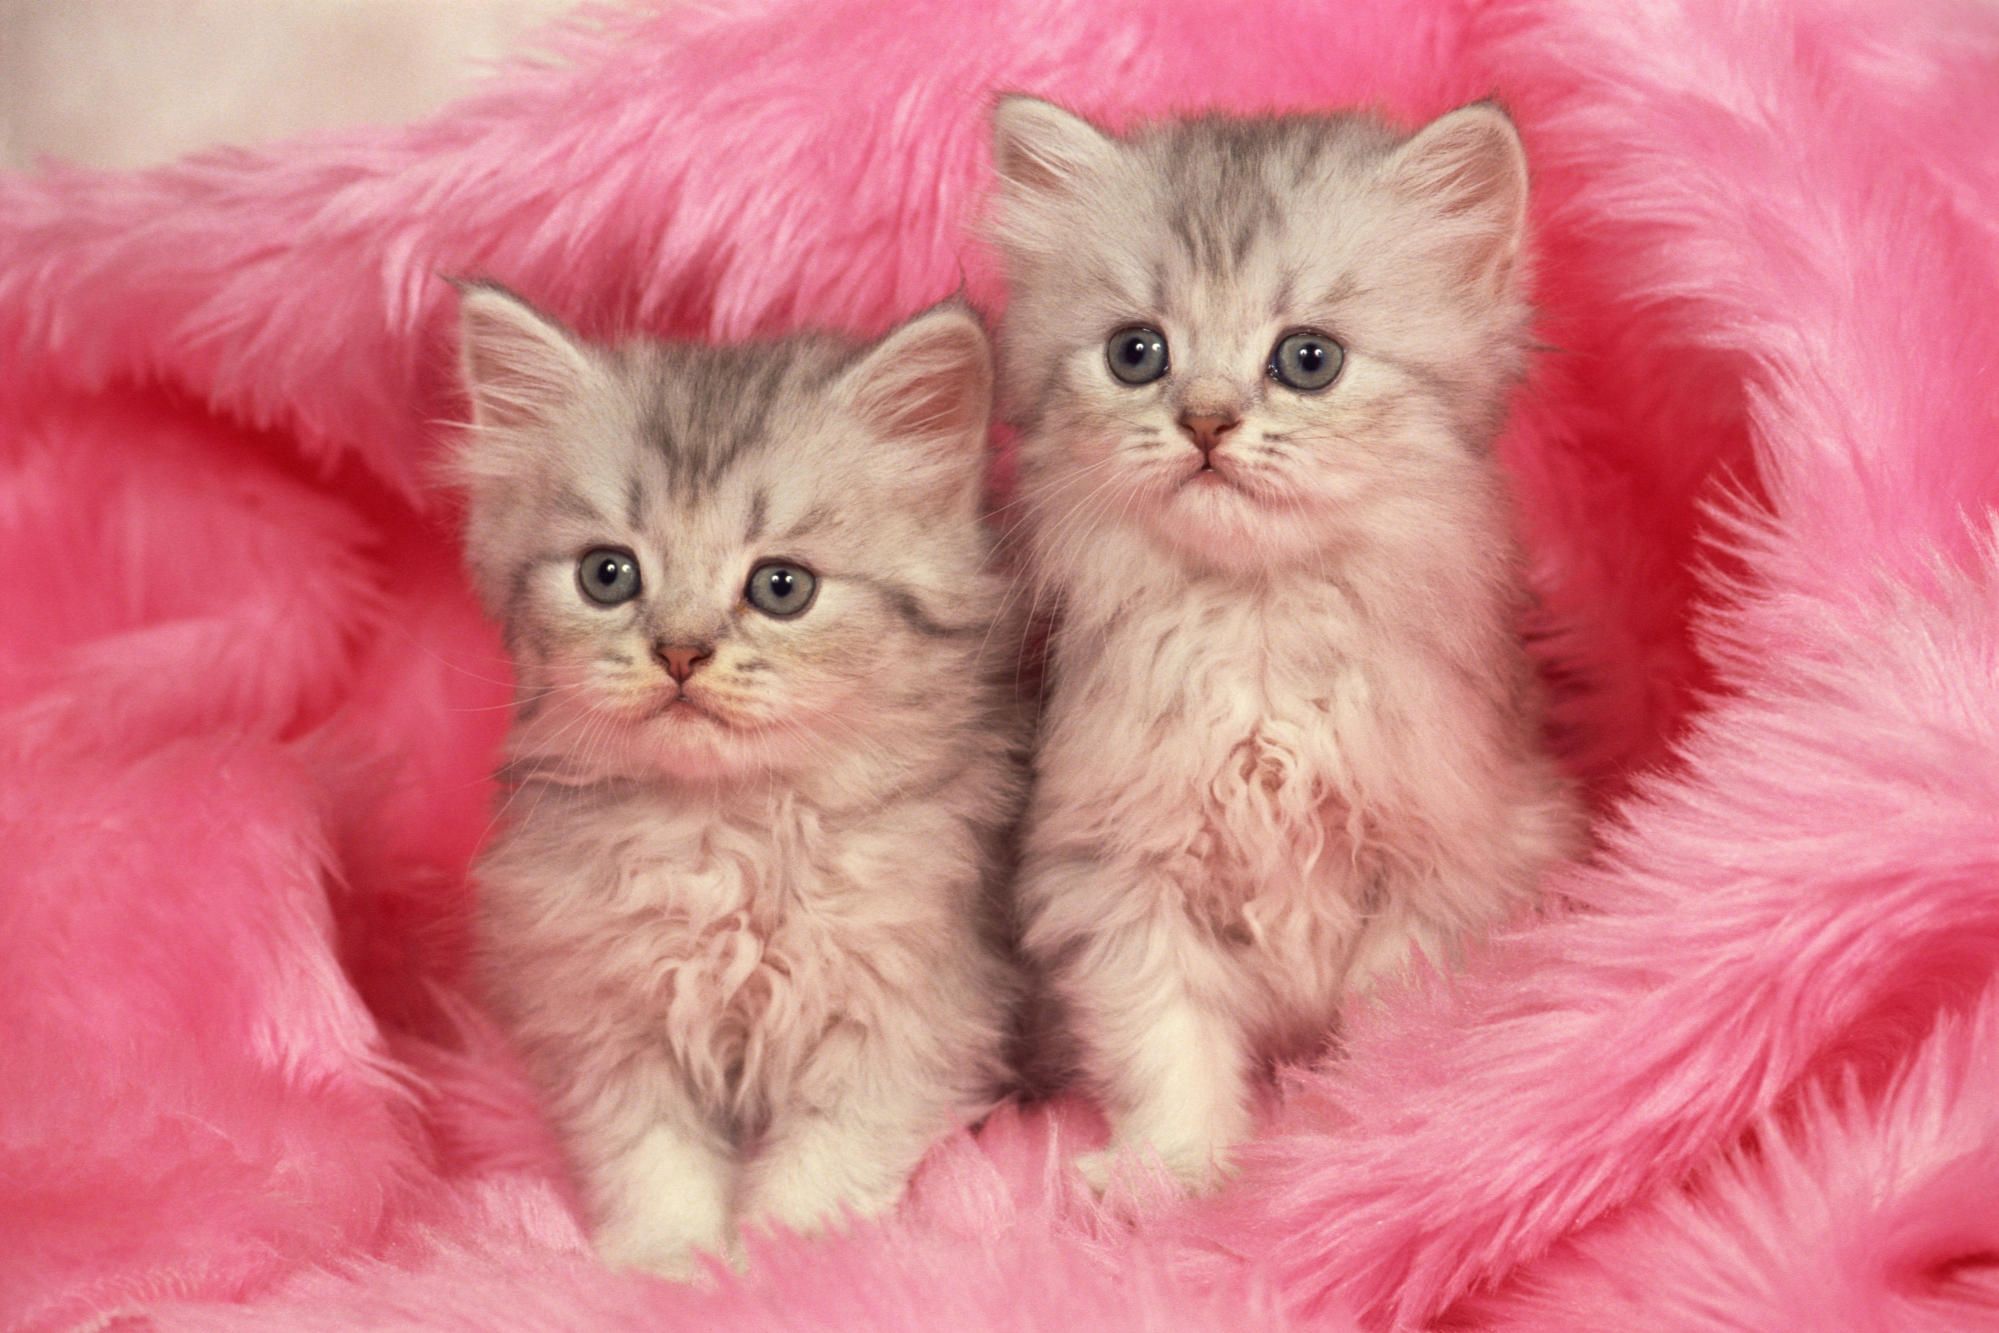 39 Best Pink kitty wallpaper ideas | pink kitty wallpaper, kitty wallpaper,  cute wallpapers